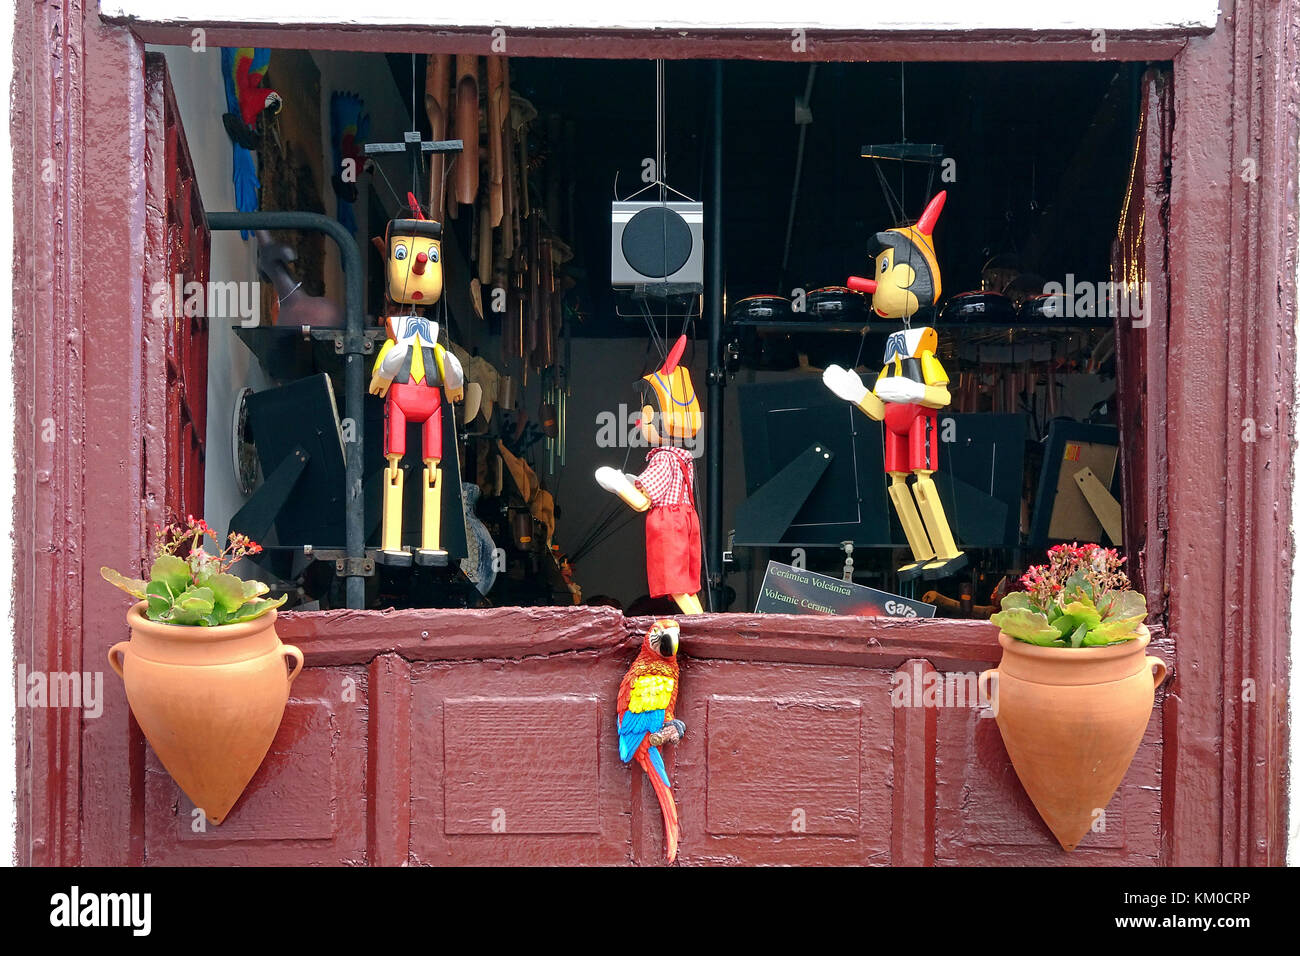 Pinocchio, shop sells wooden dolls, handcraft, village Garachico, north-west coast of Tenerife island, Canary islands, Spain Stock Photo